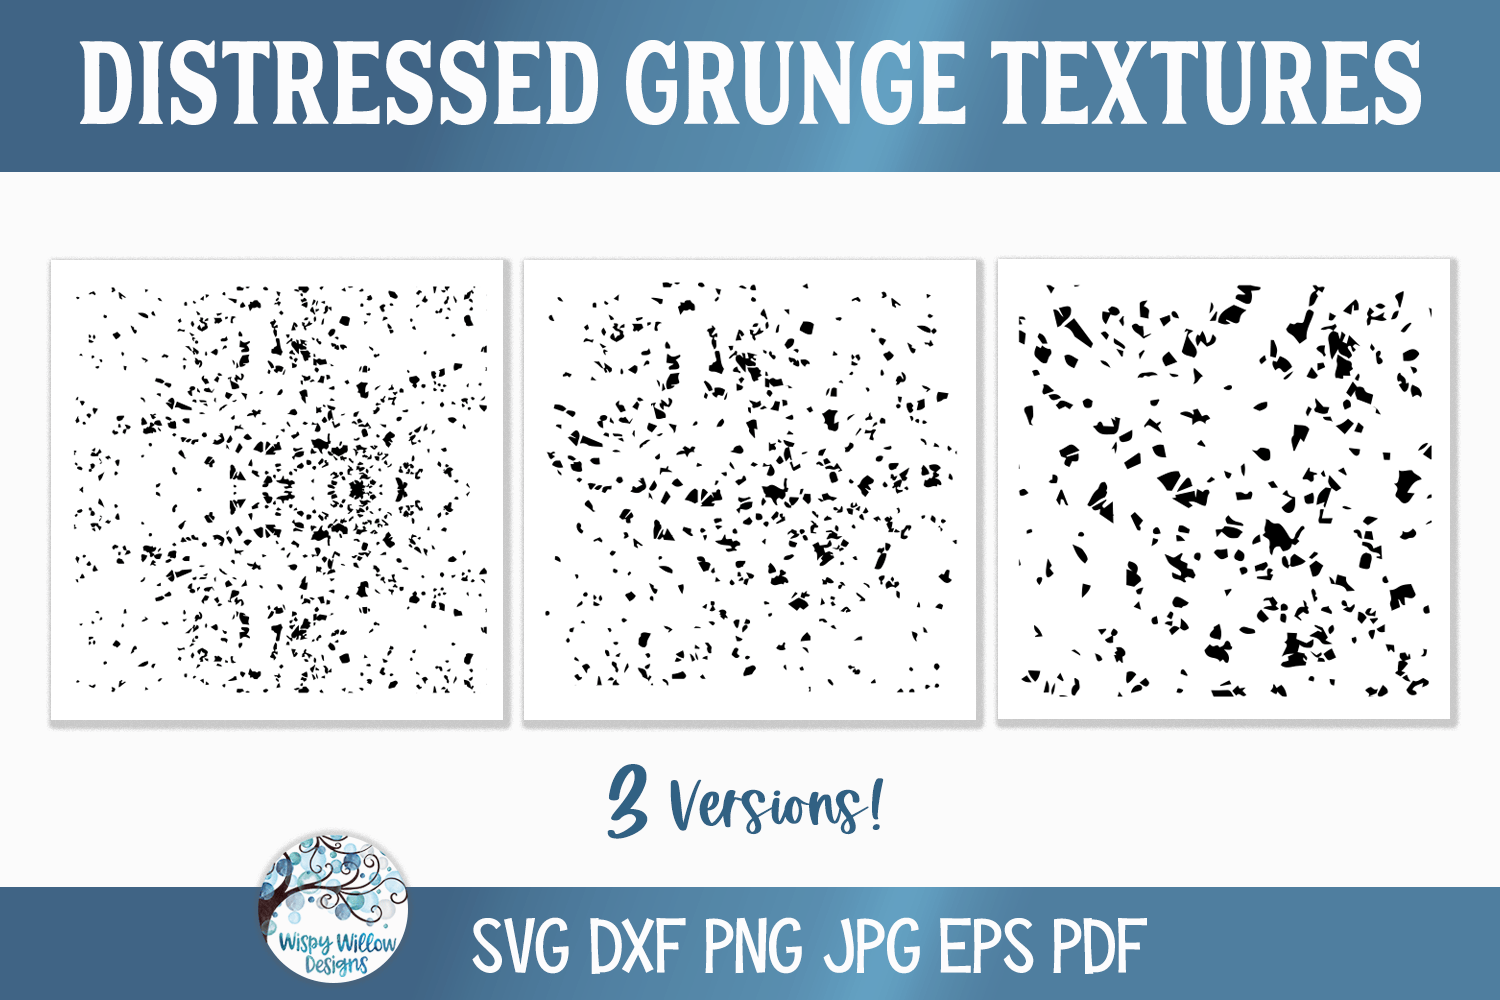 Distressed Grunge Texture SVG Bundle Wispy Willow Designs Company